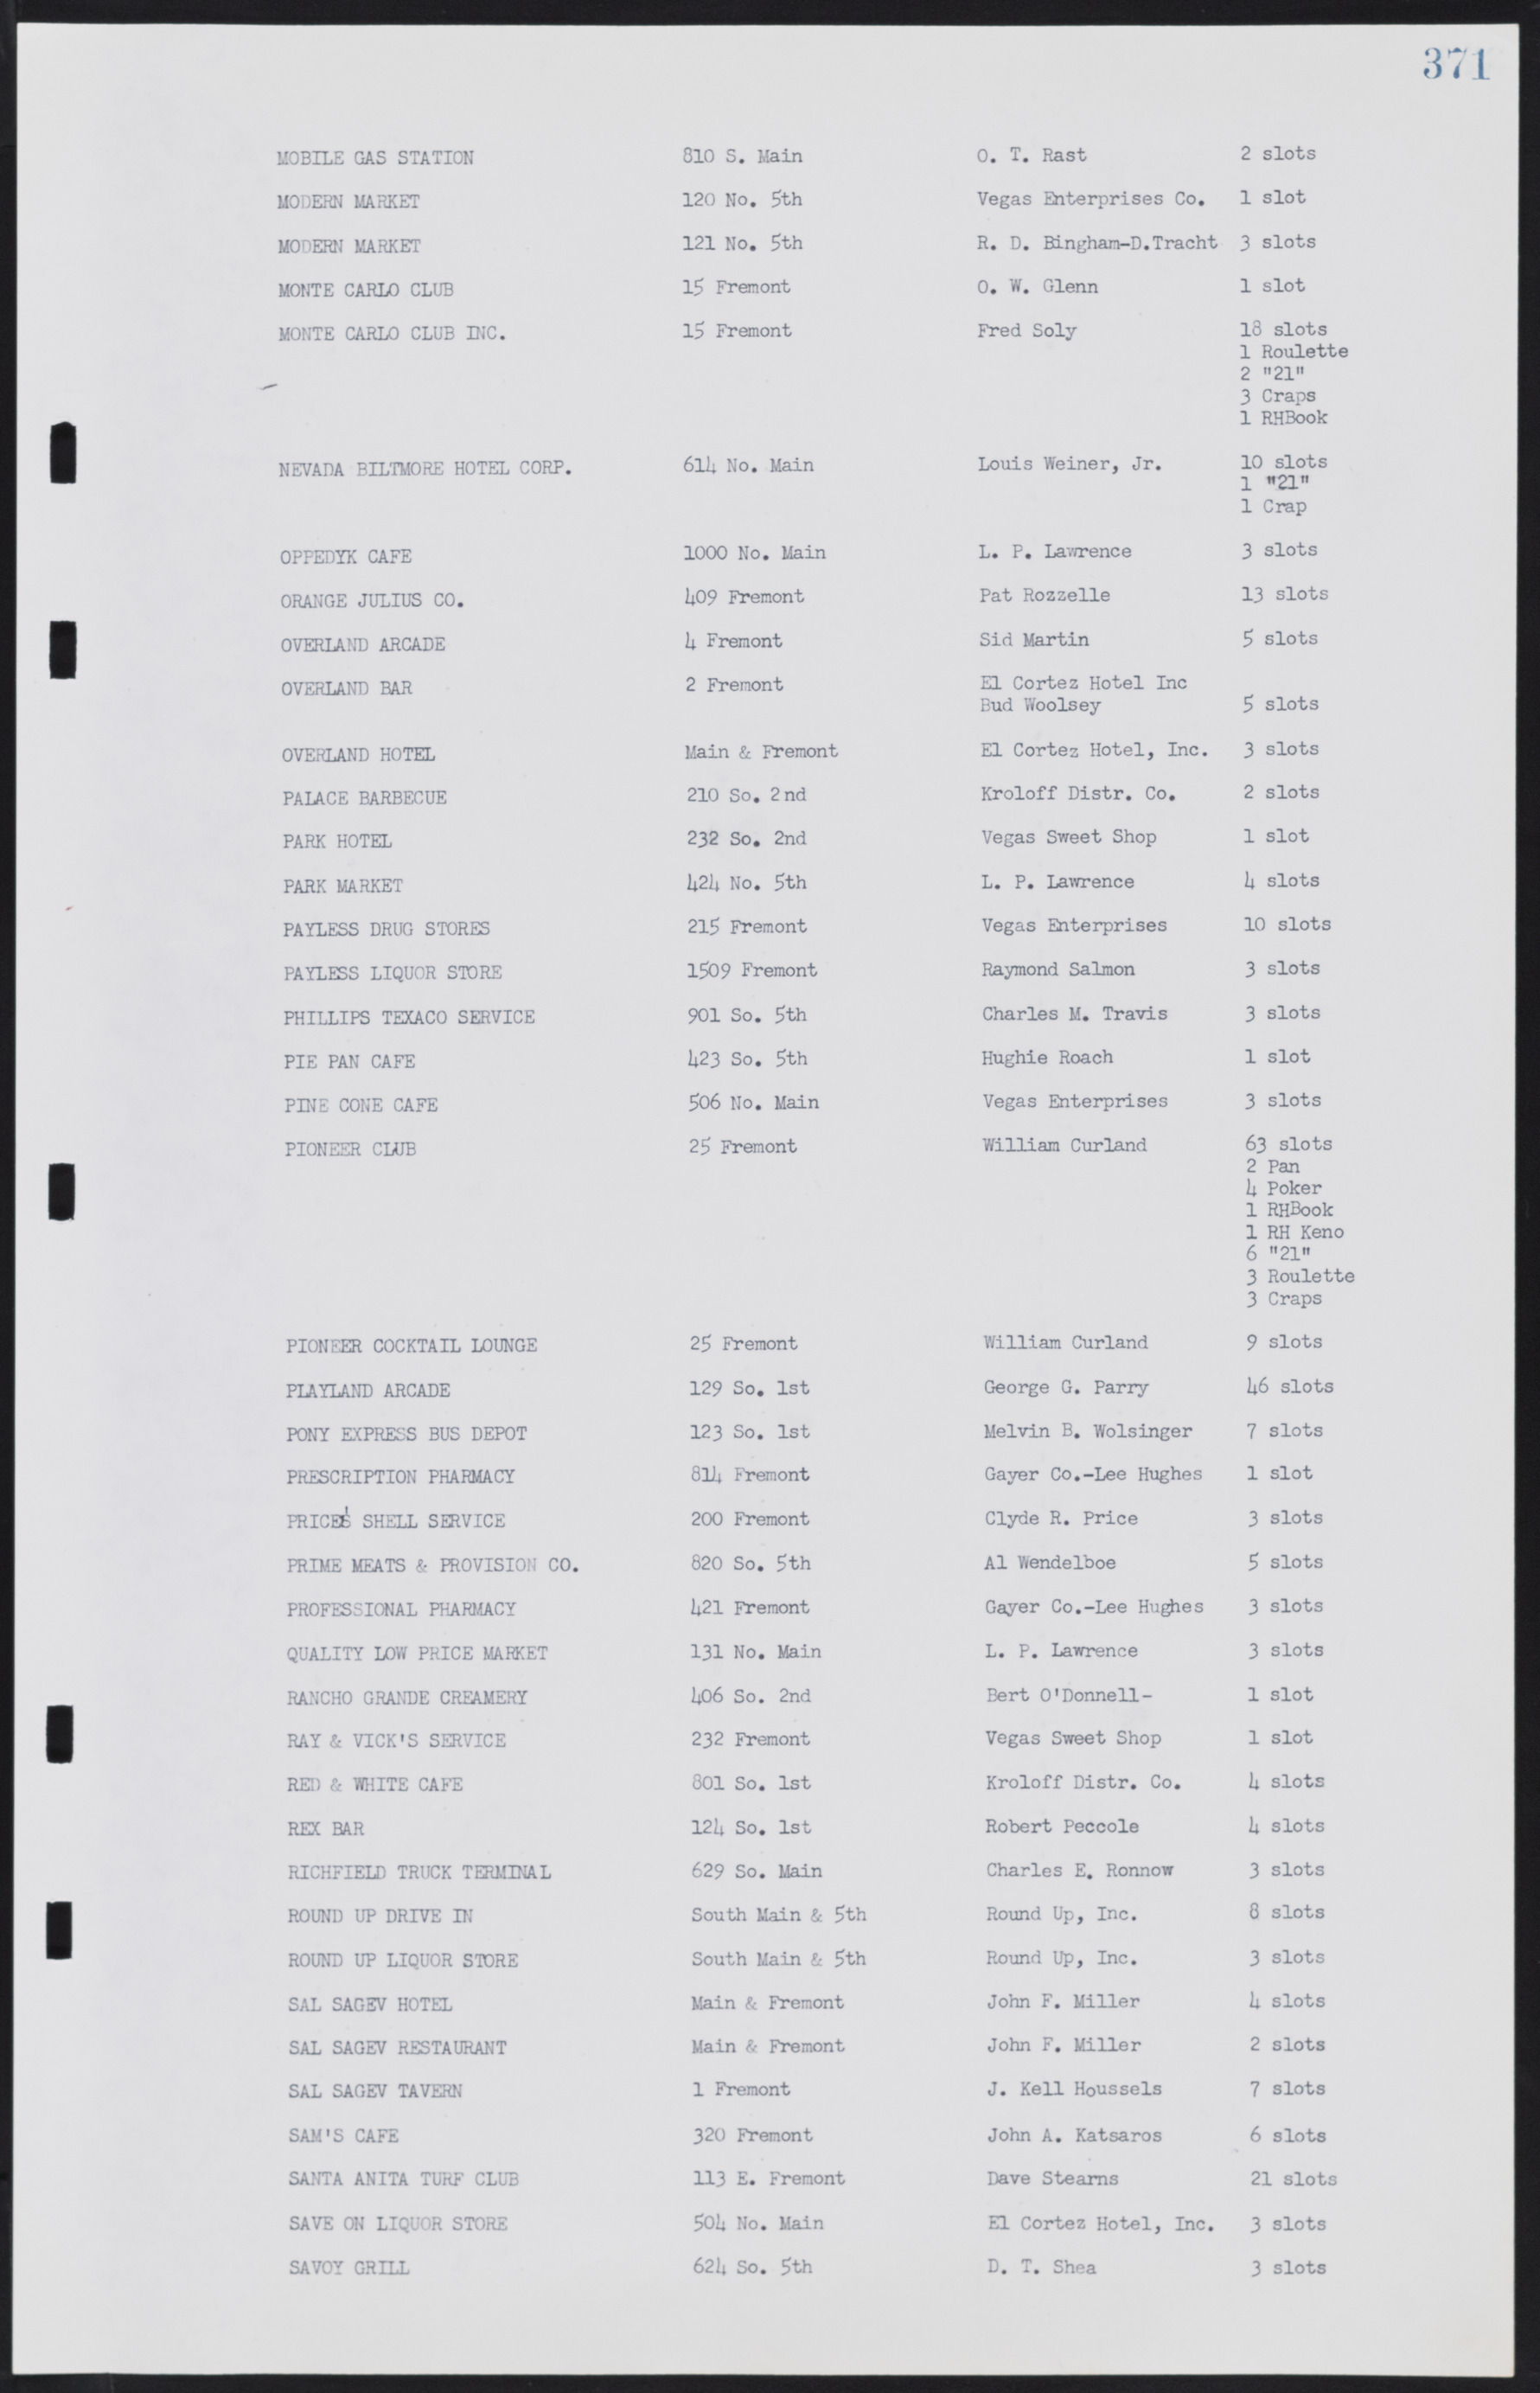 Las Vegas City Commission Minutes, January 7, 1947 to October 26, 1949, lvc000006-401